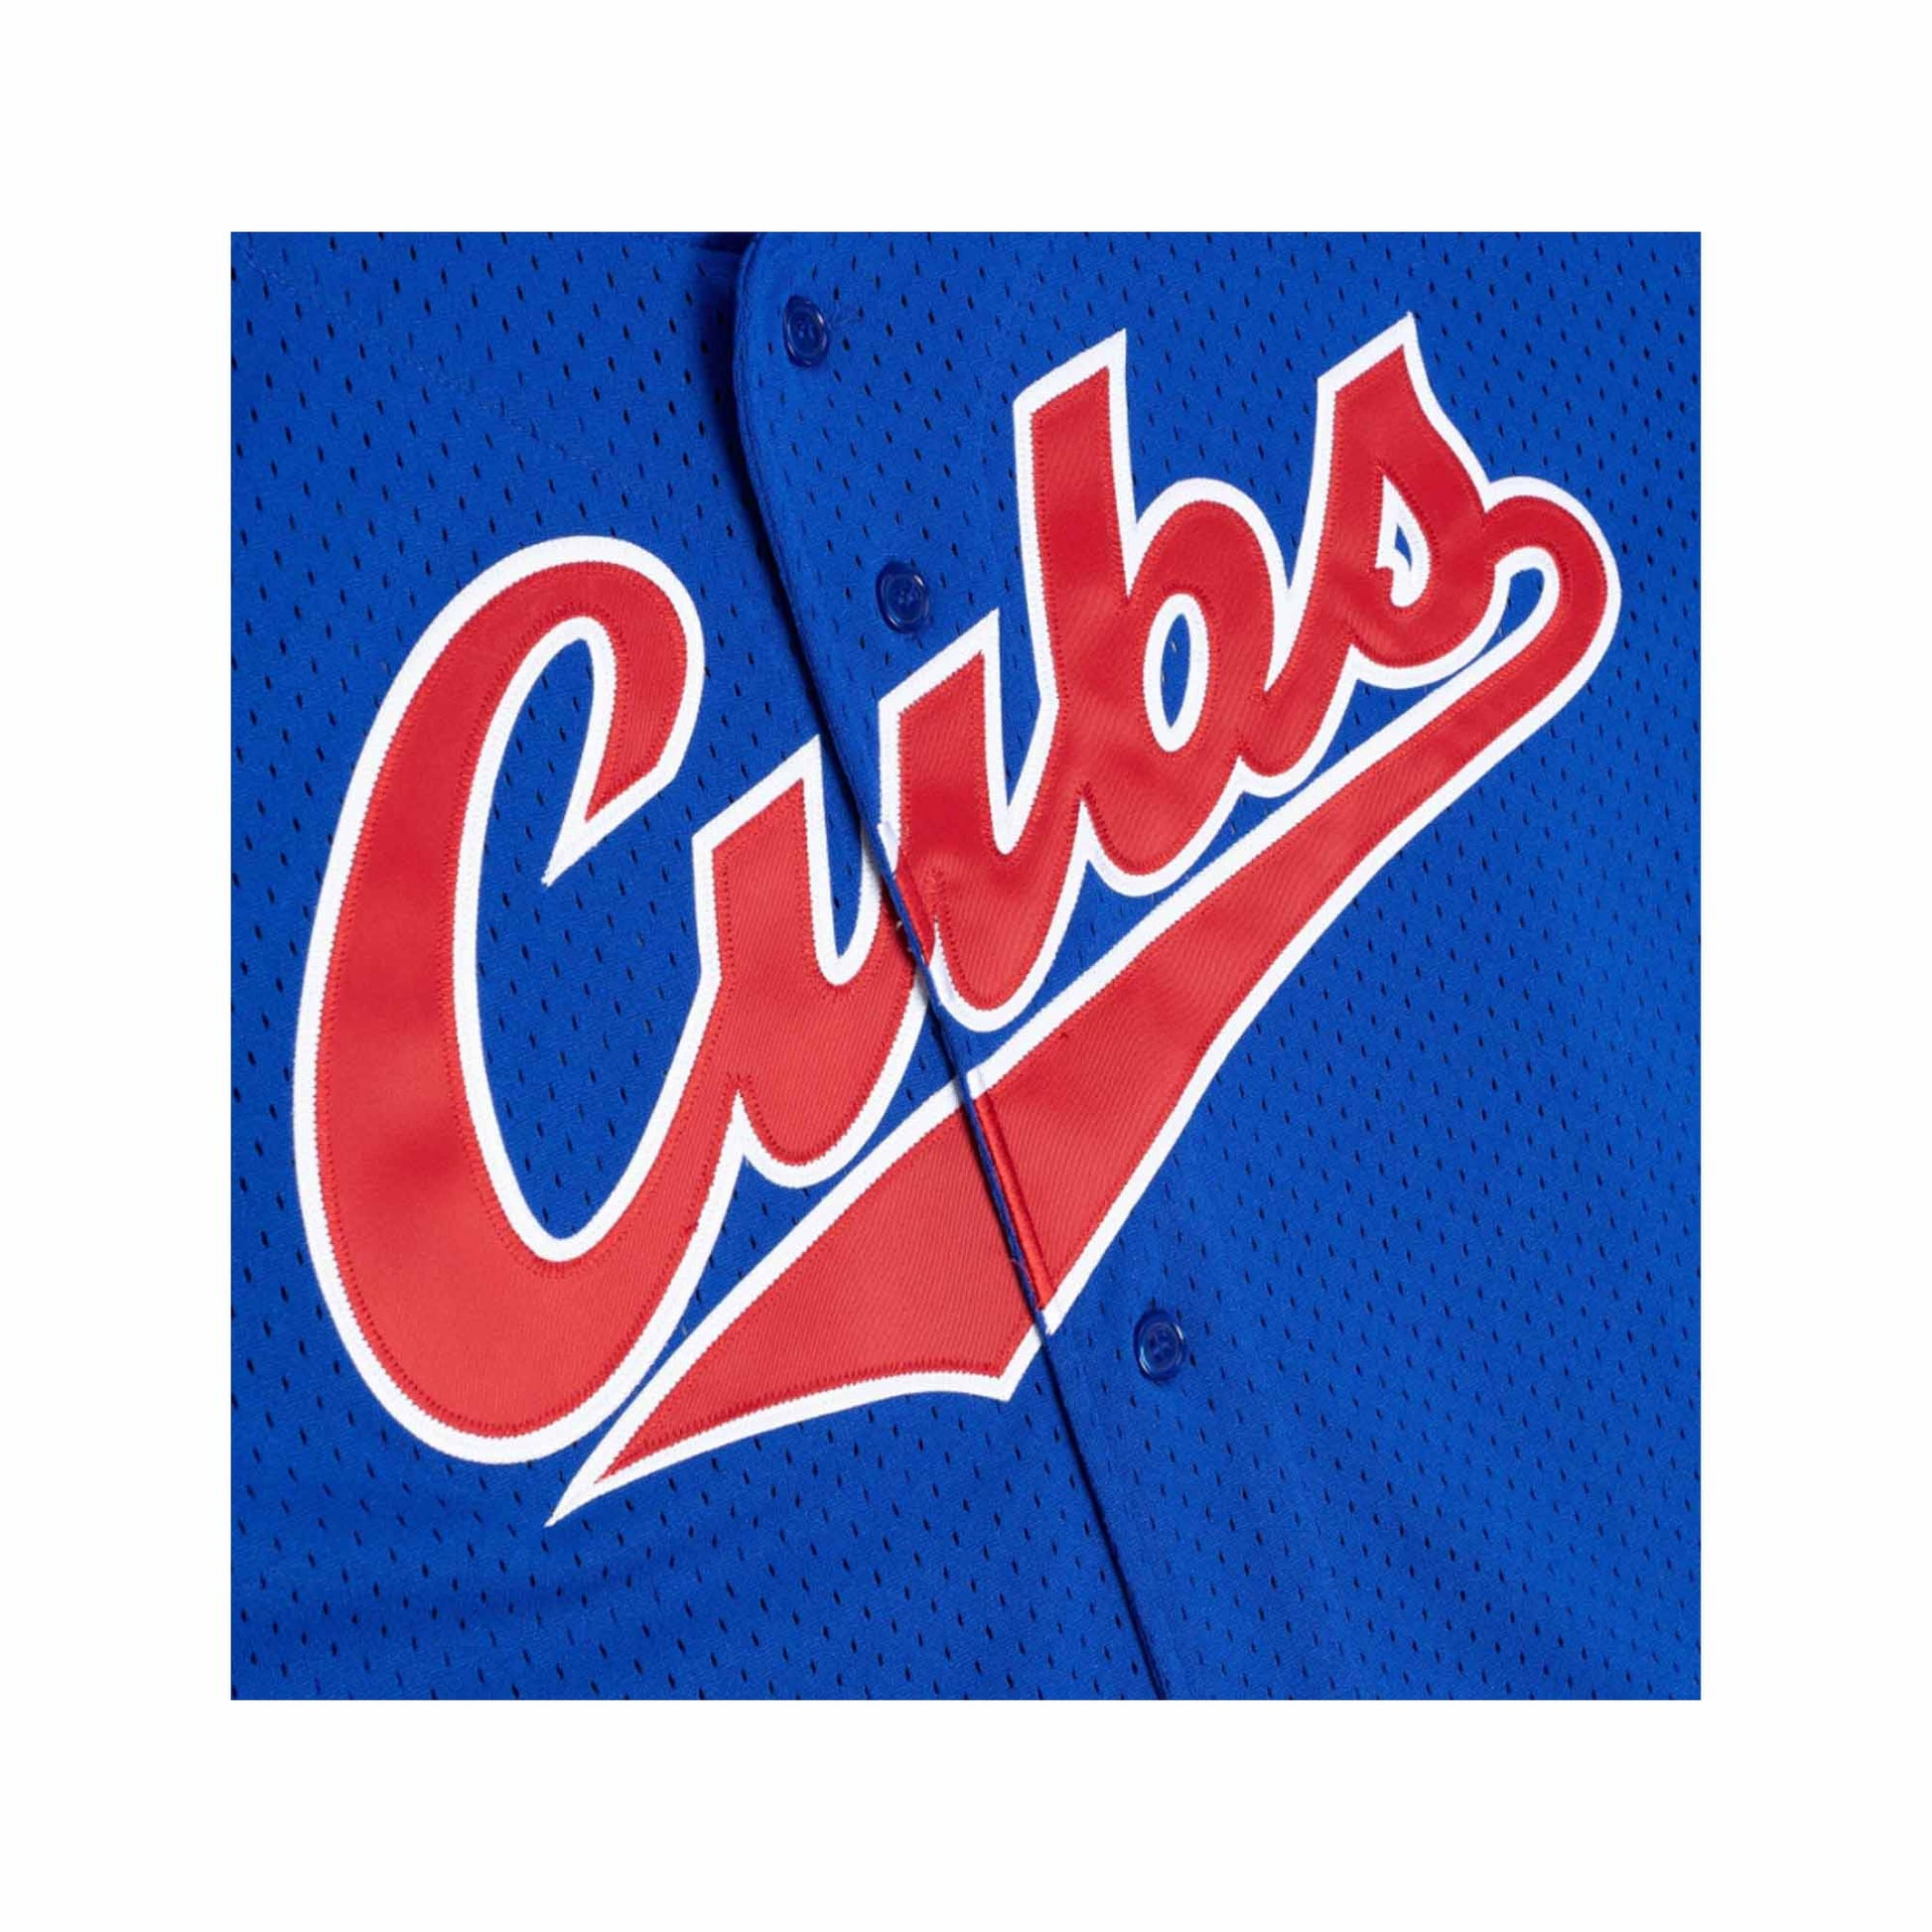 MLB Chicago Cubs (Ryne Sandberg) Men's Cooperstown Baseball Jersey